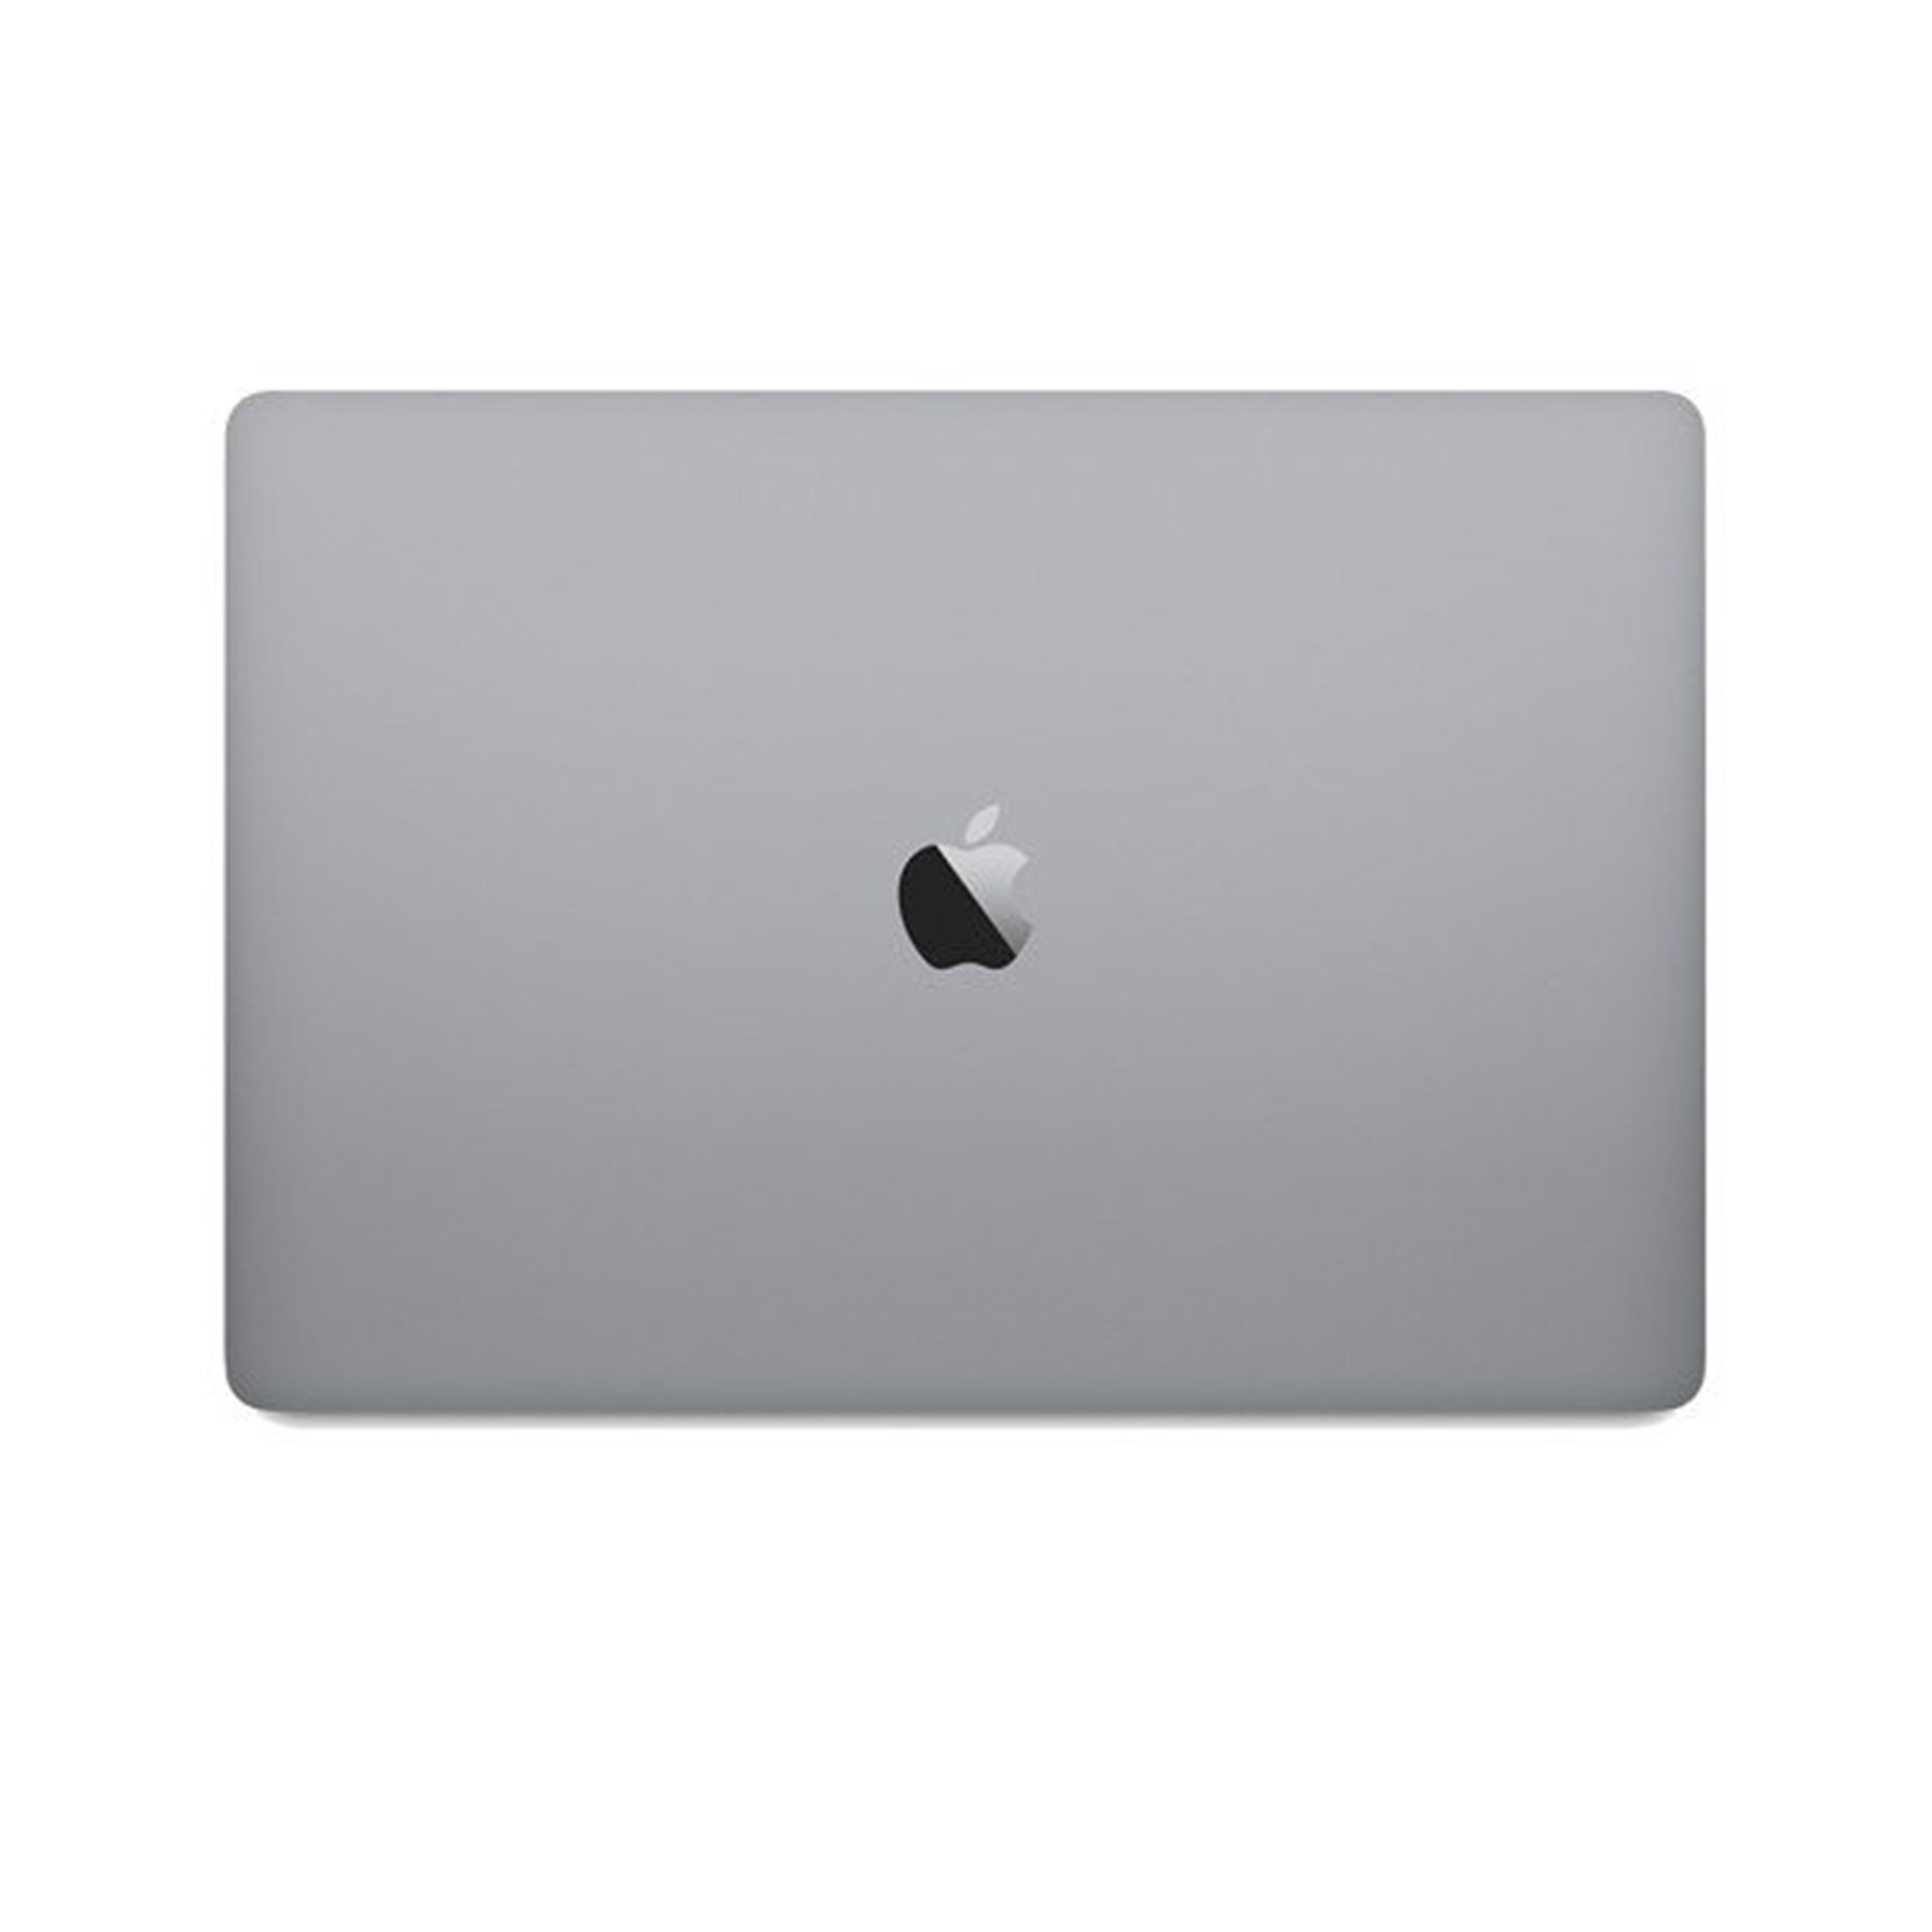  Macbook Pro Retina 13 inch 2016 256GB Gray 